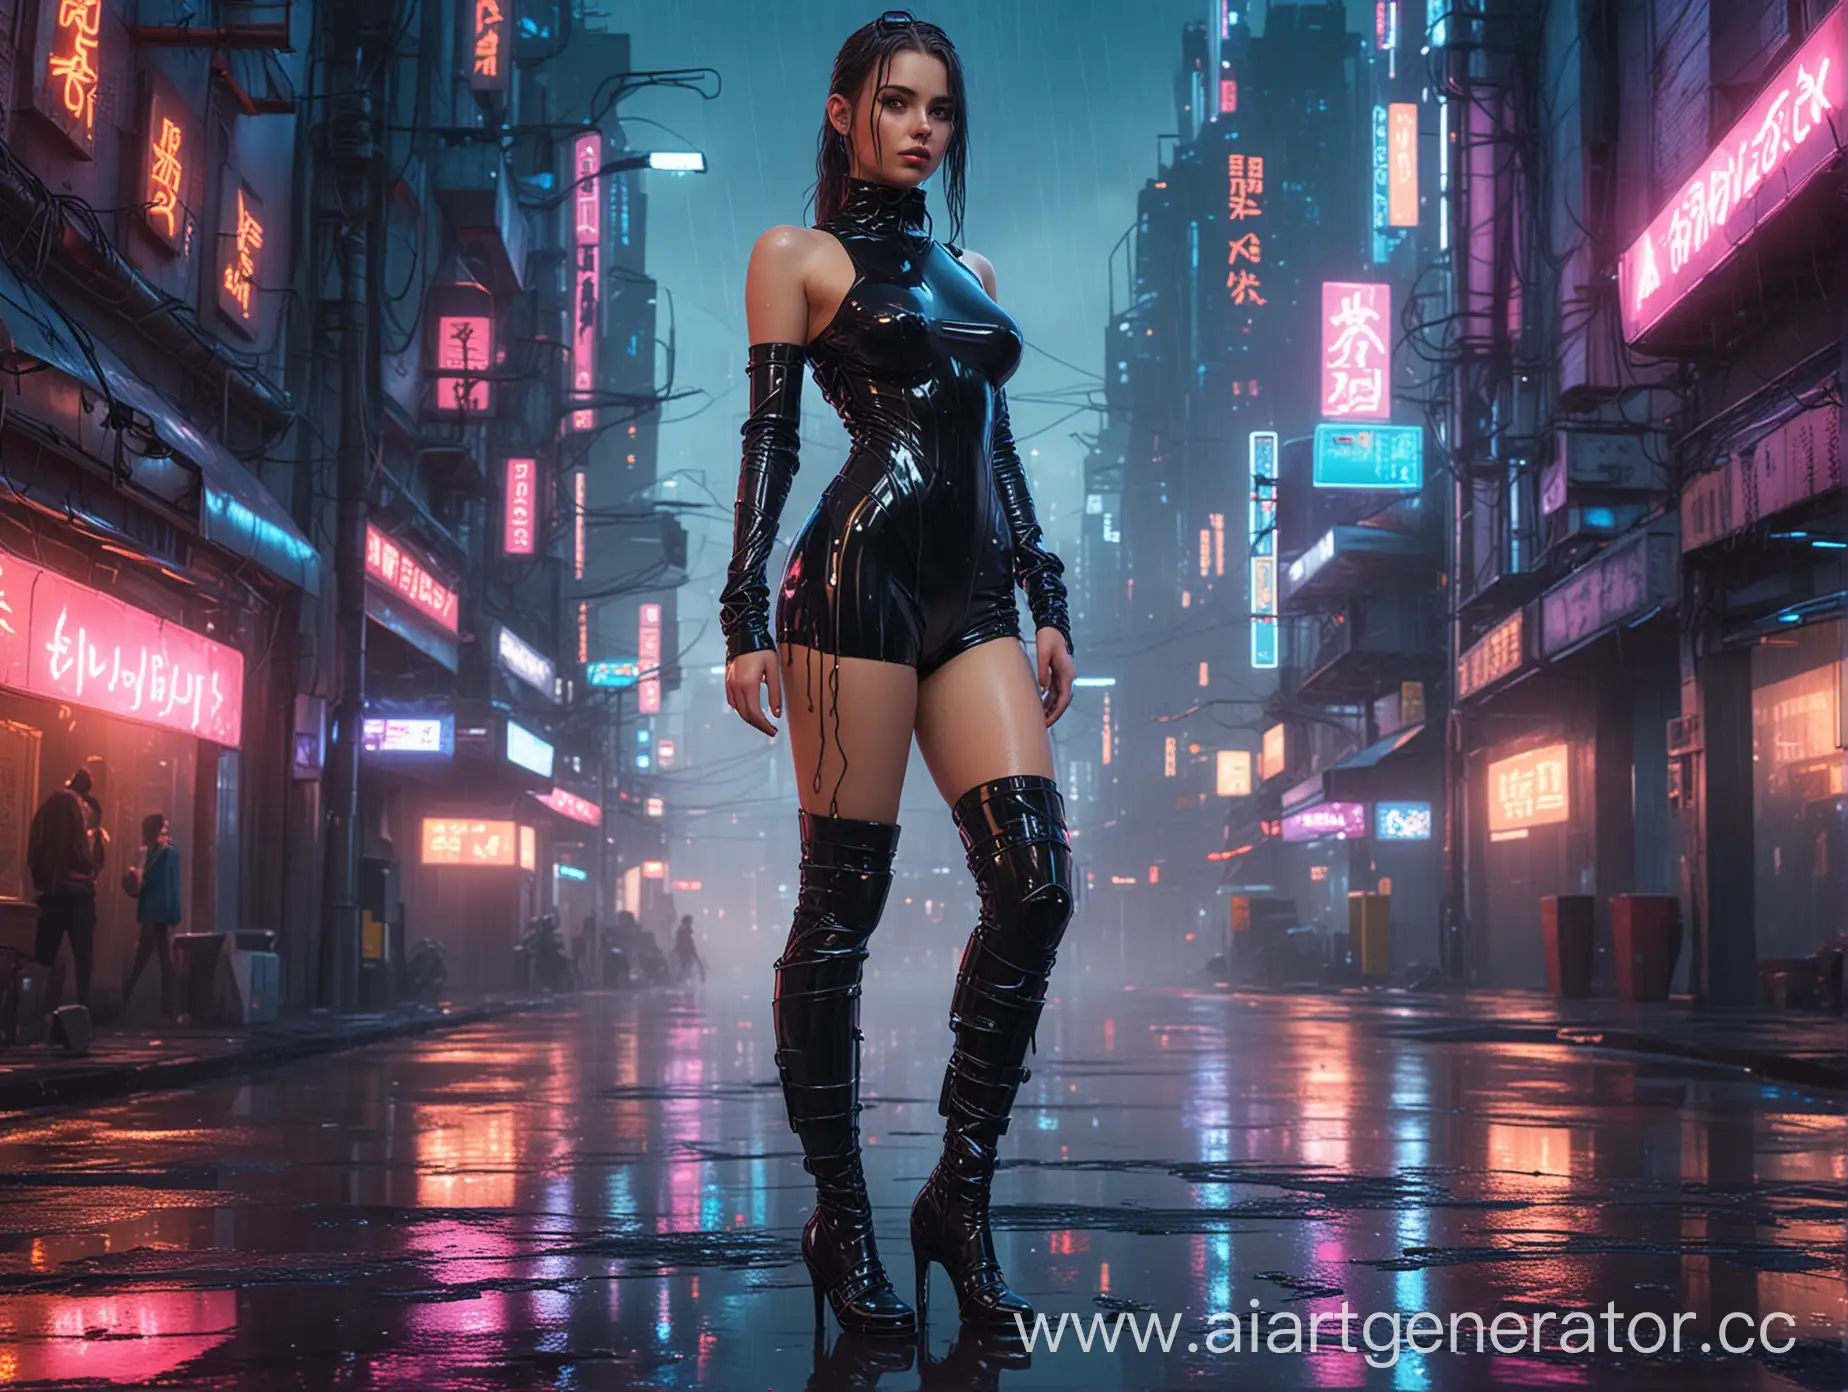 Futuristic-Cyberpunk-Woman-in-Translucent-Latex-Amid-Neon-City-Lights